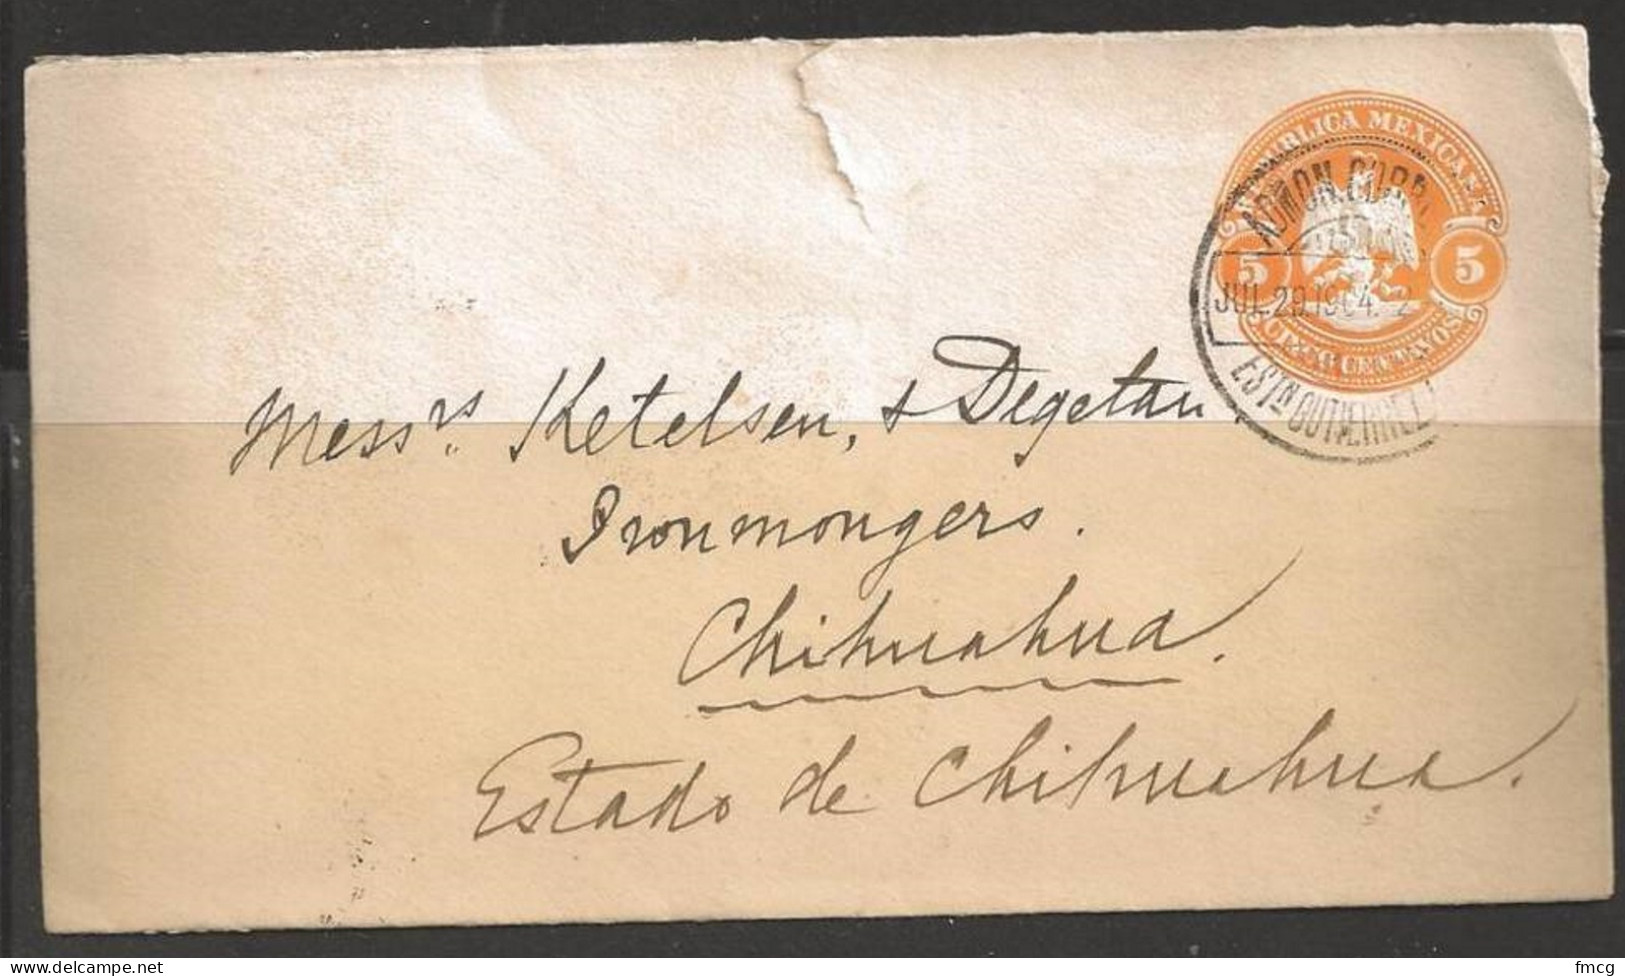 Mexico 1904 5c Postal Envelope Used Jul 29 1904, Chinuahua - México